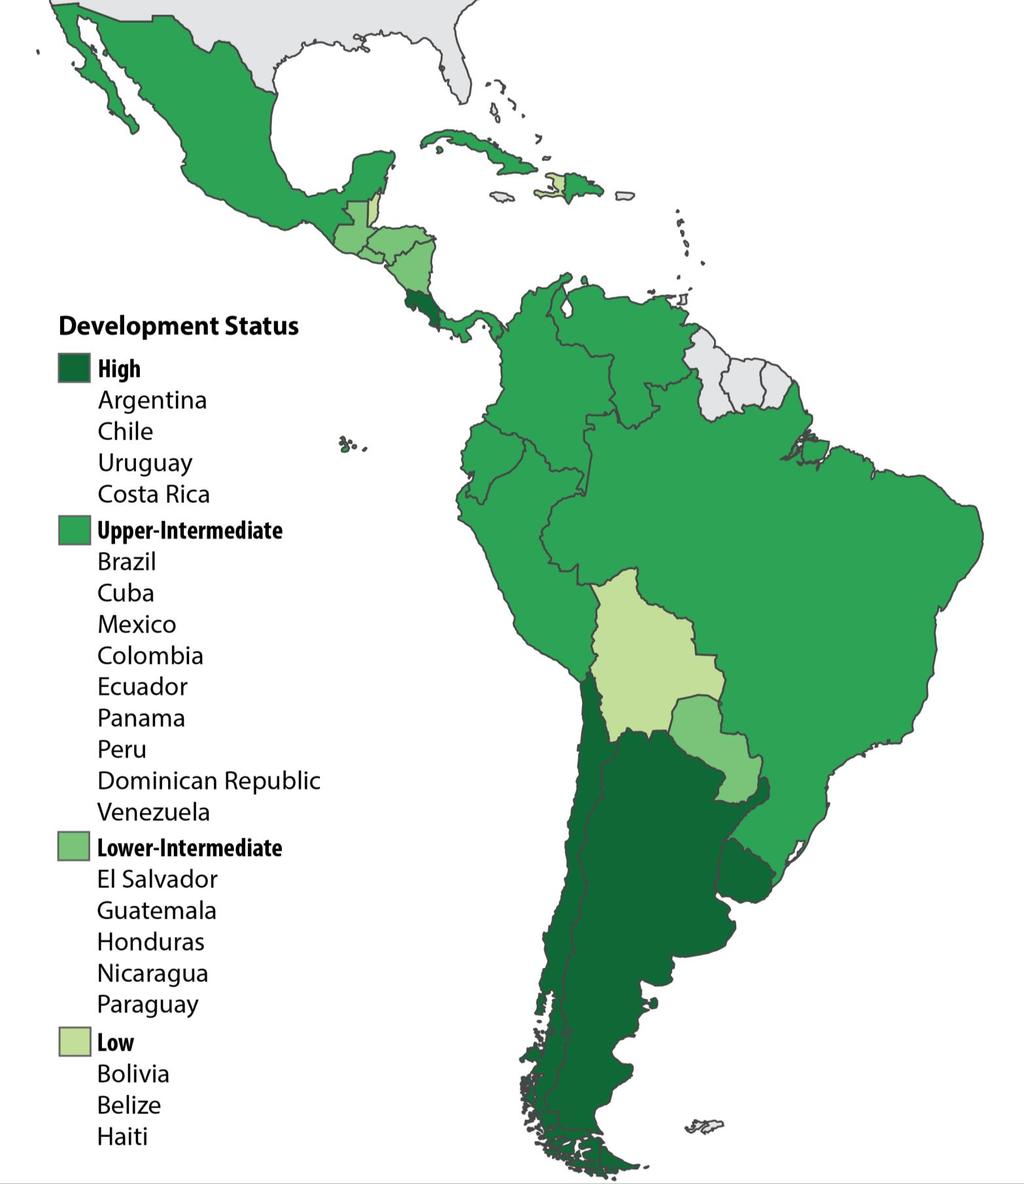 Classification of Countries Development Status